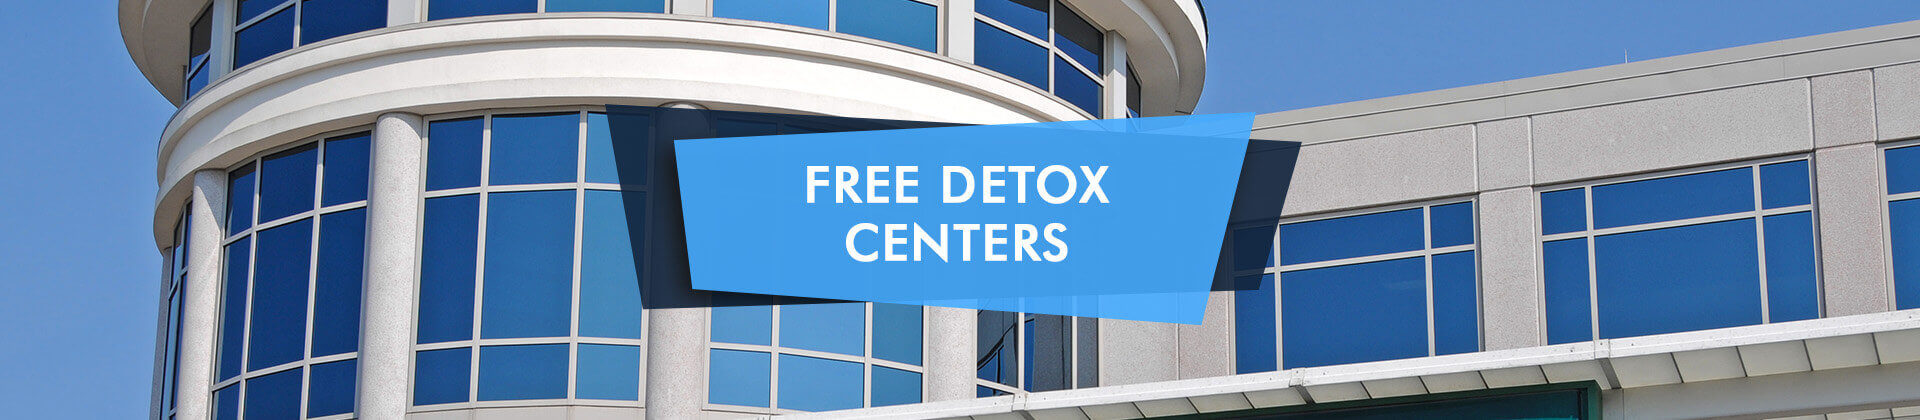 Free Detox Centers 